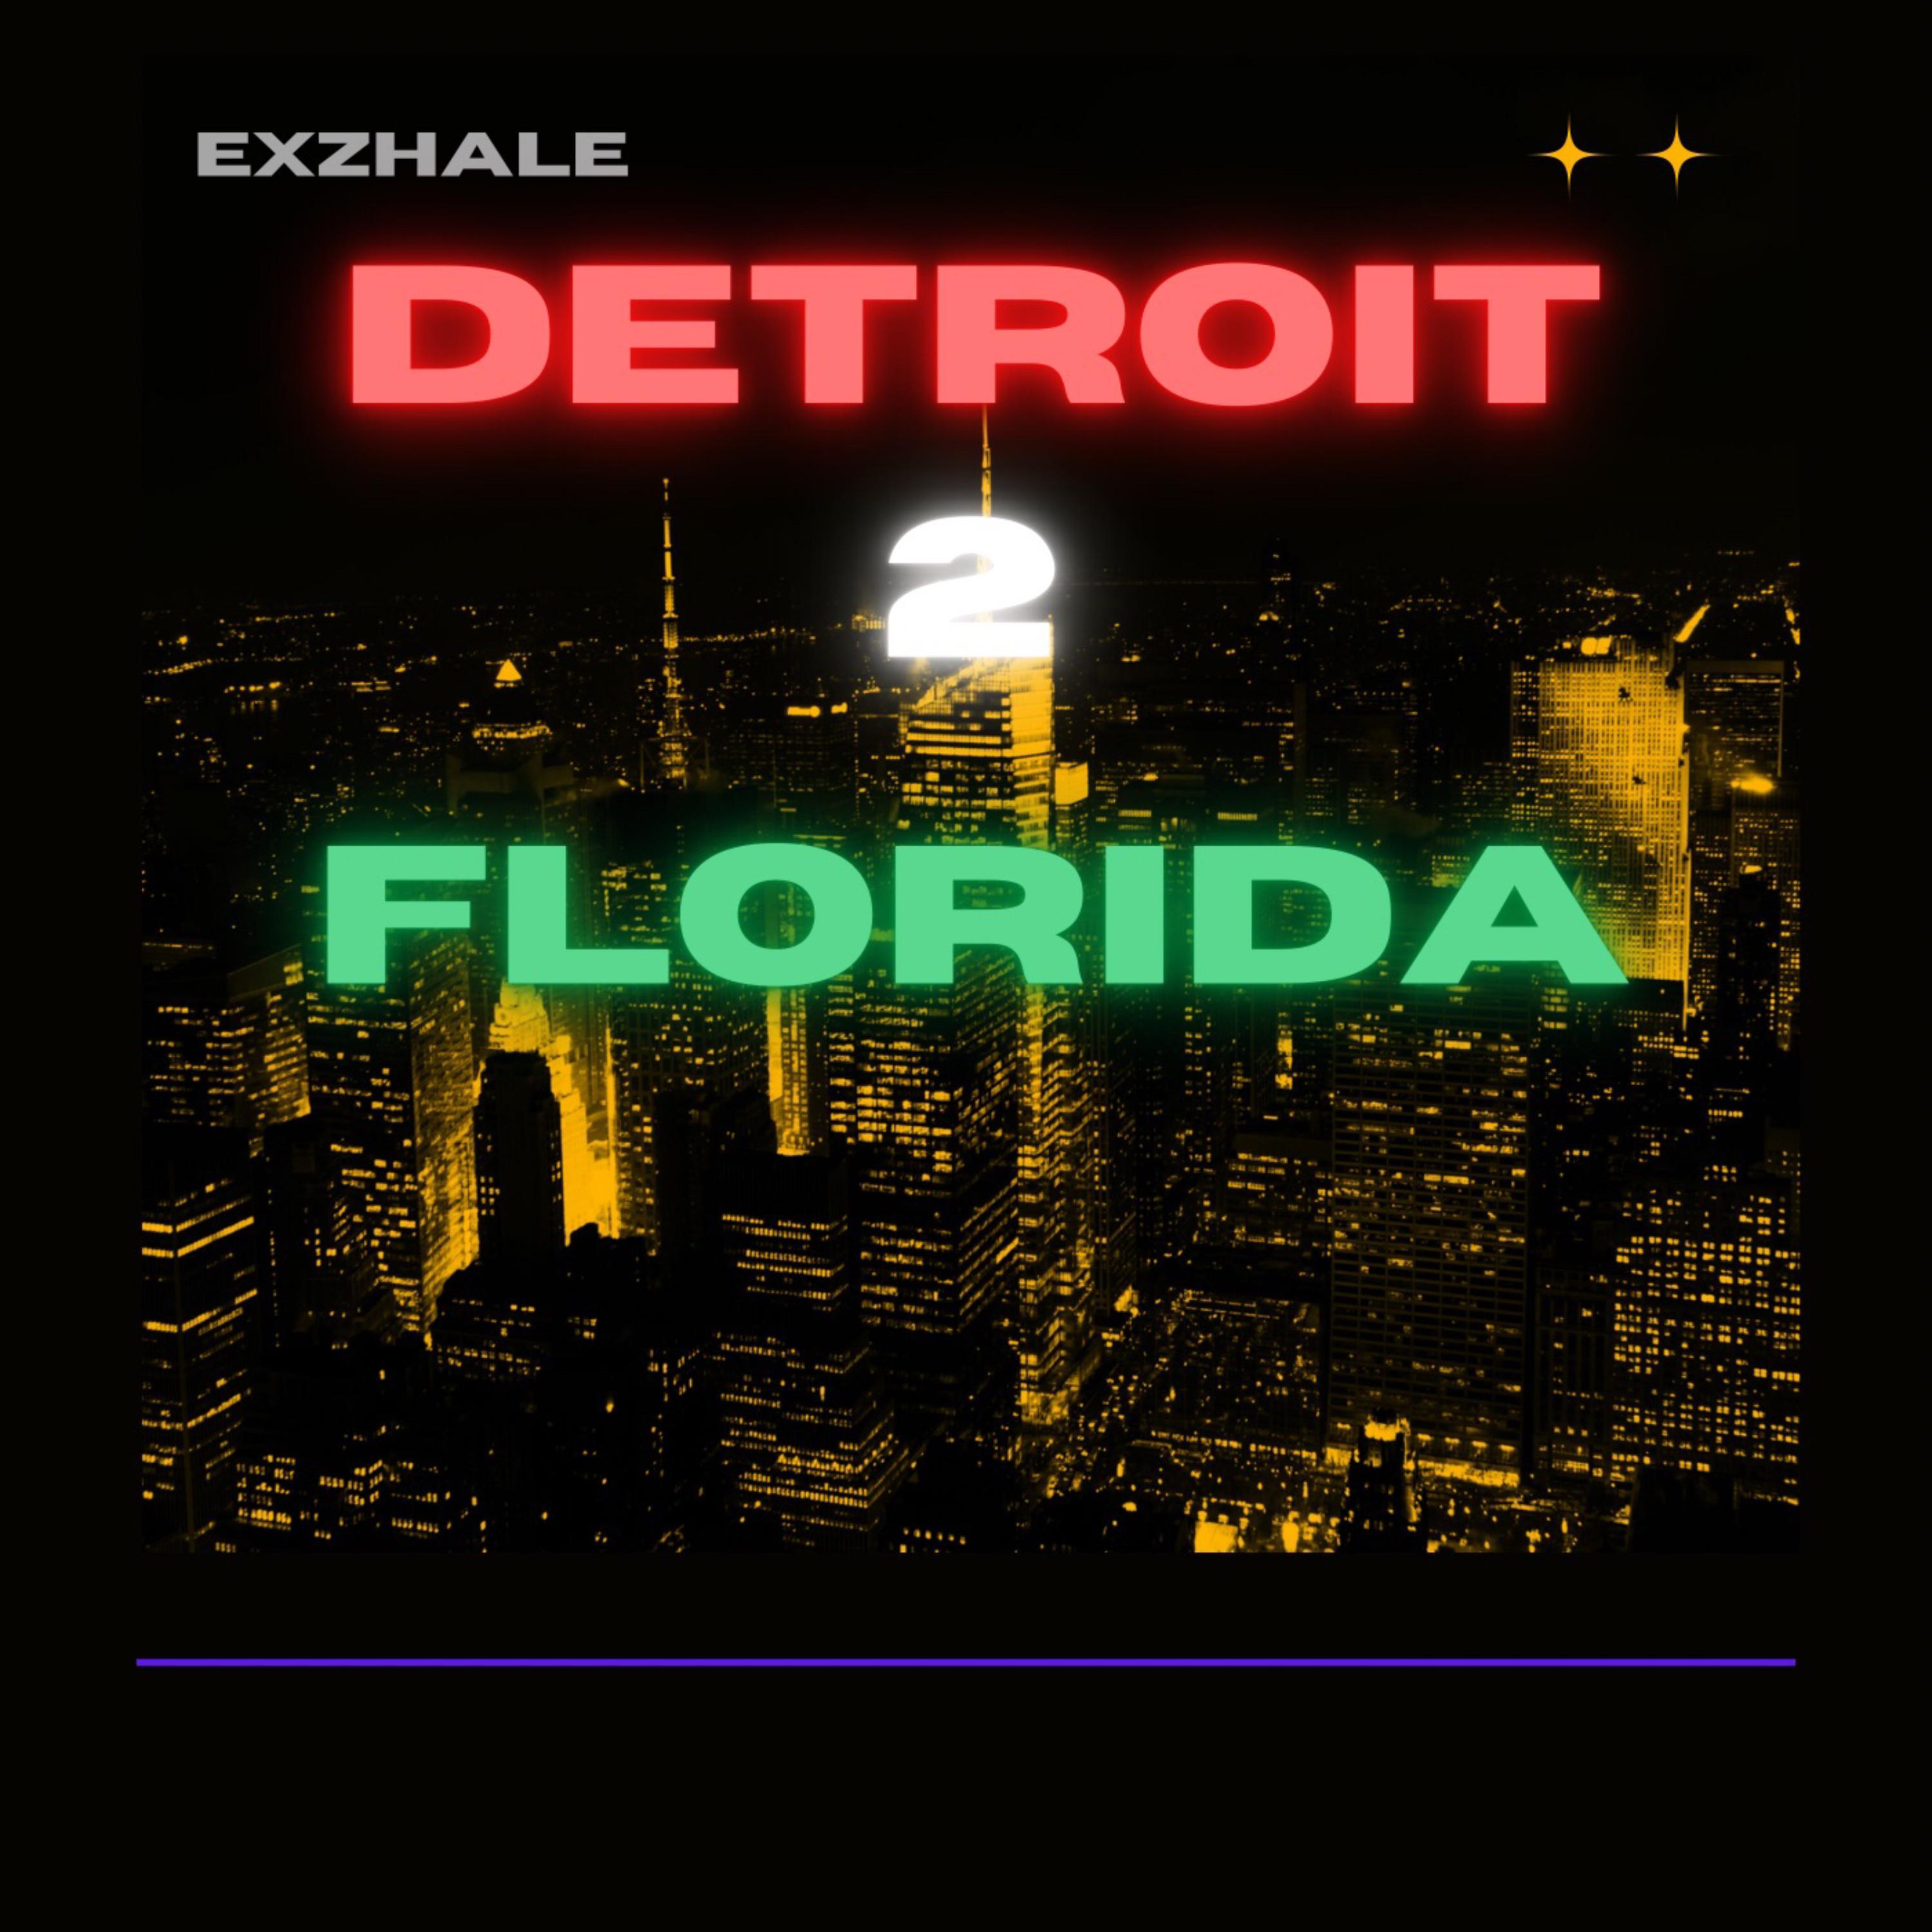 Exzhale - Detroit2Florida